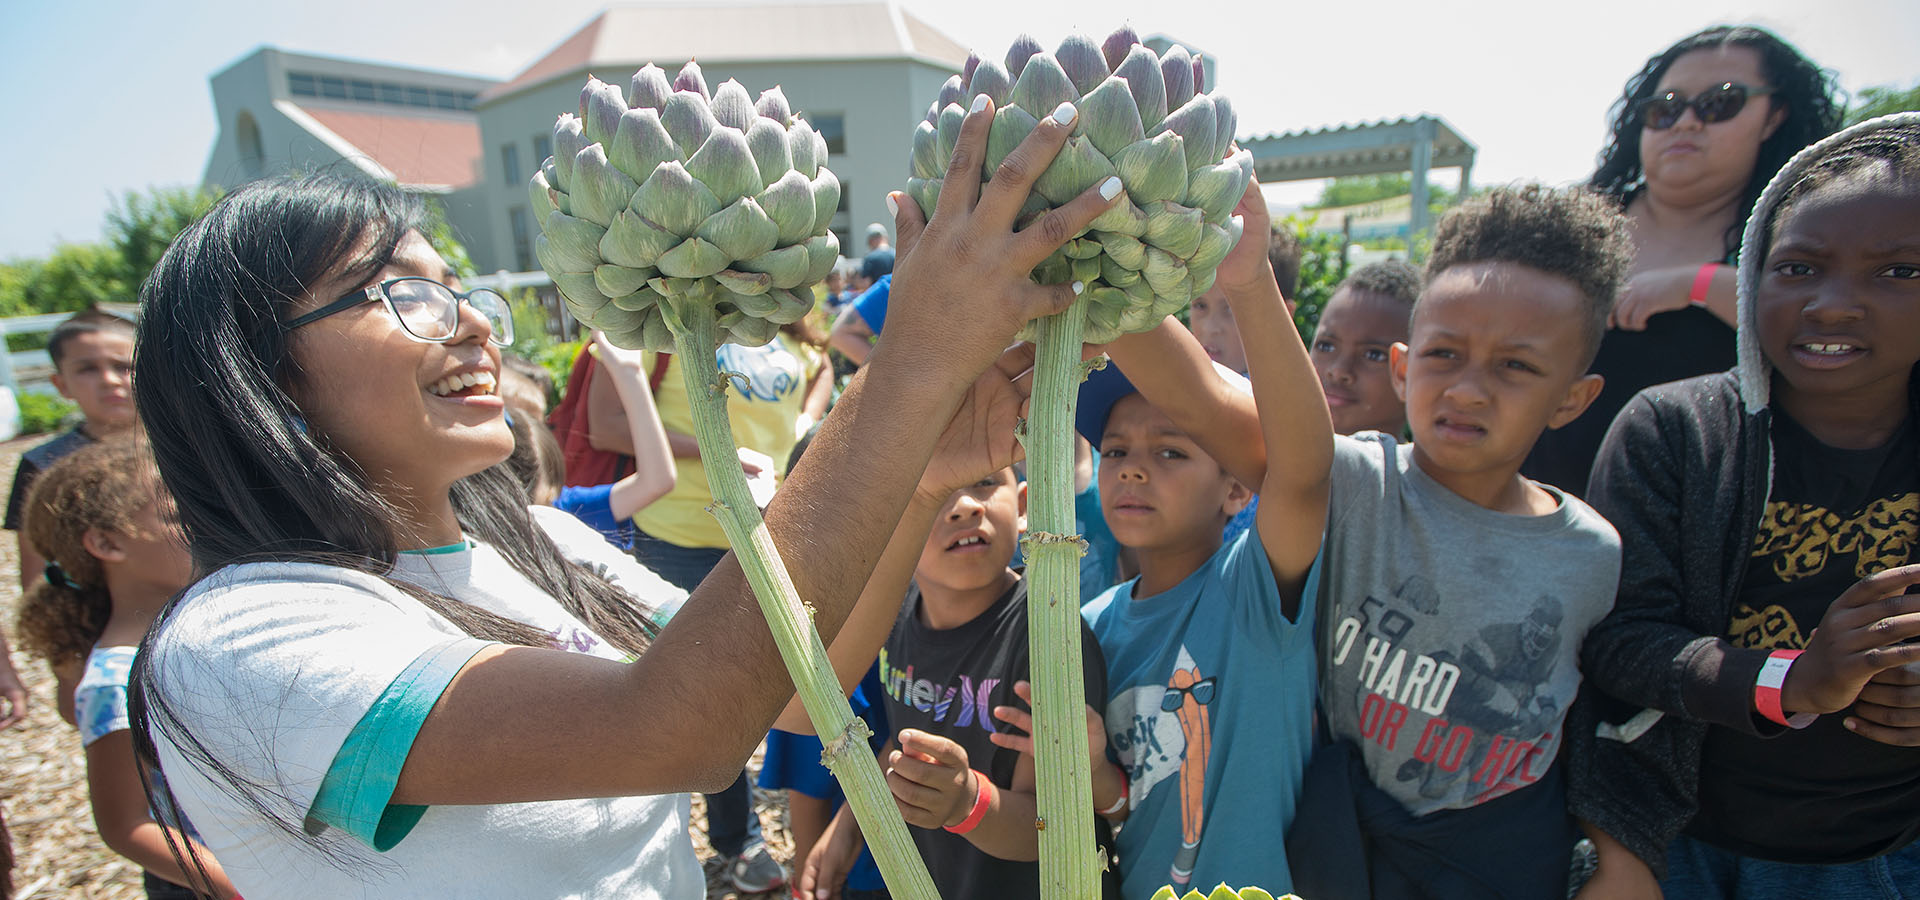 Schoolchildren cluster around and handle an artichoke plant